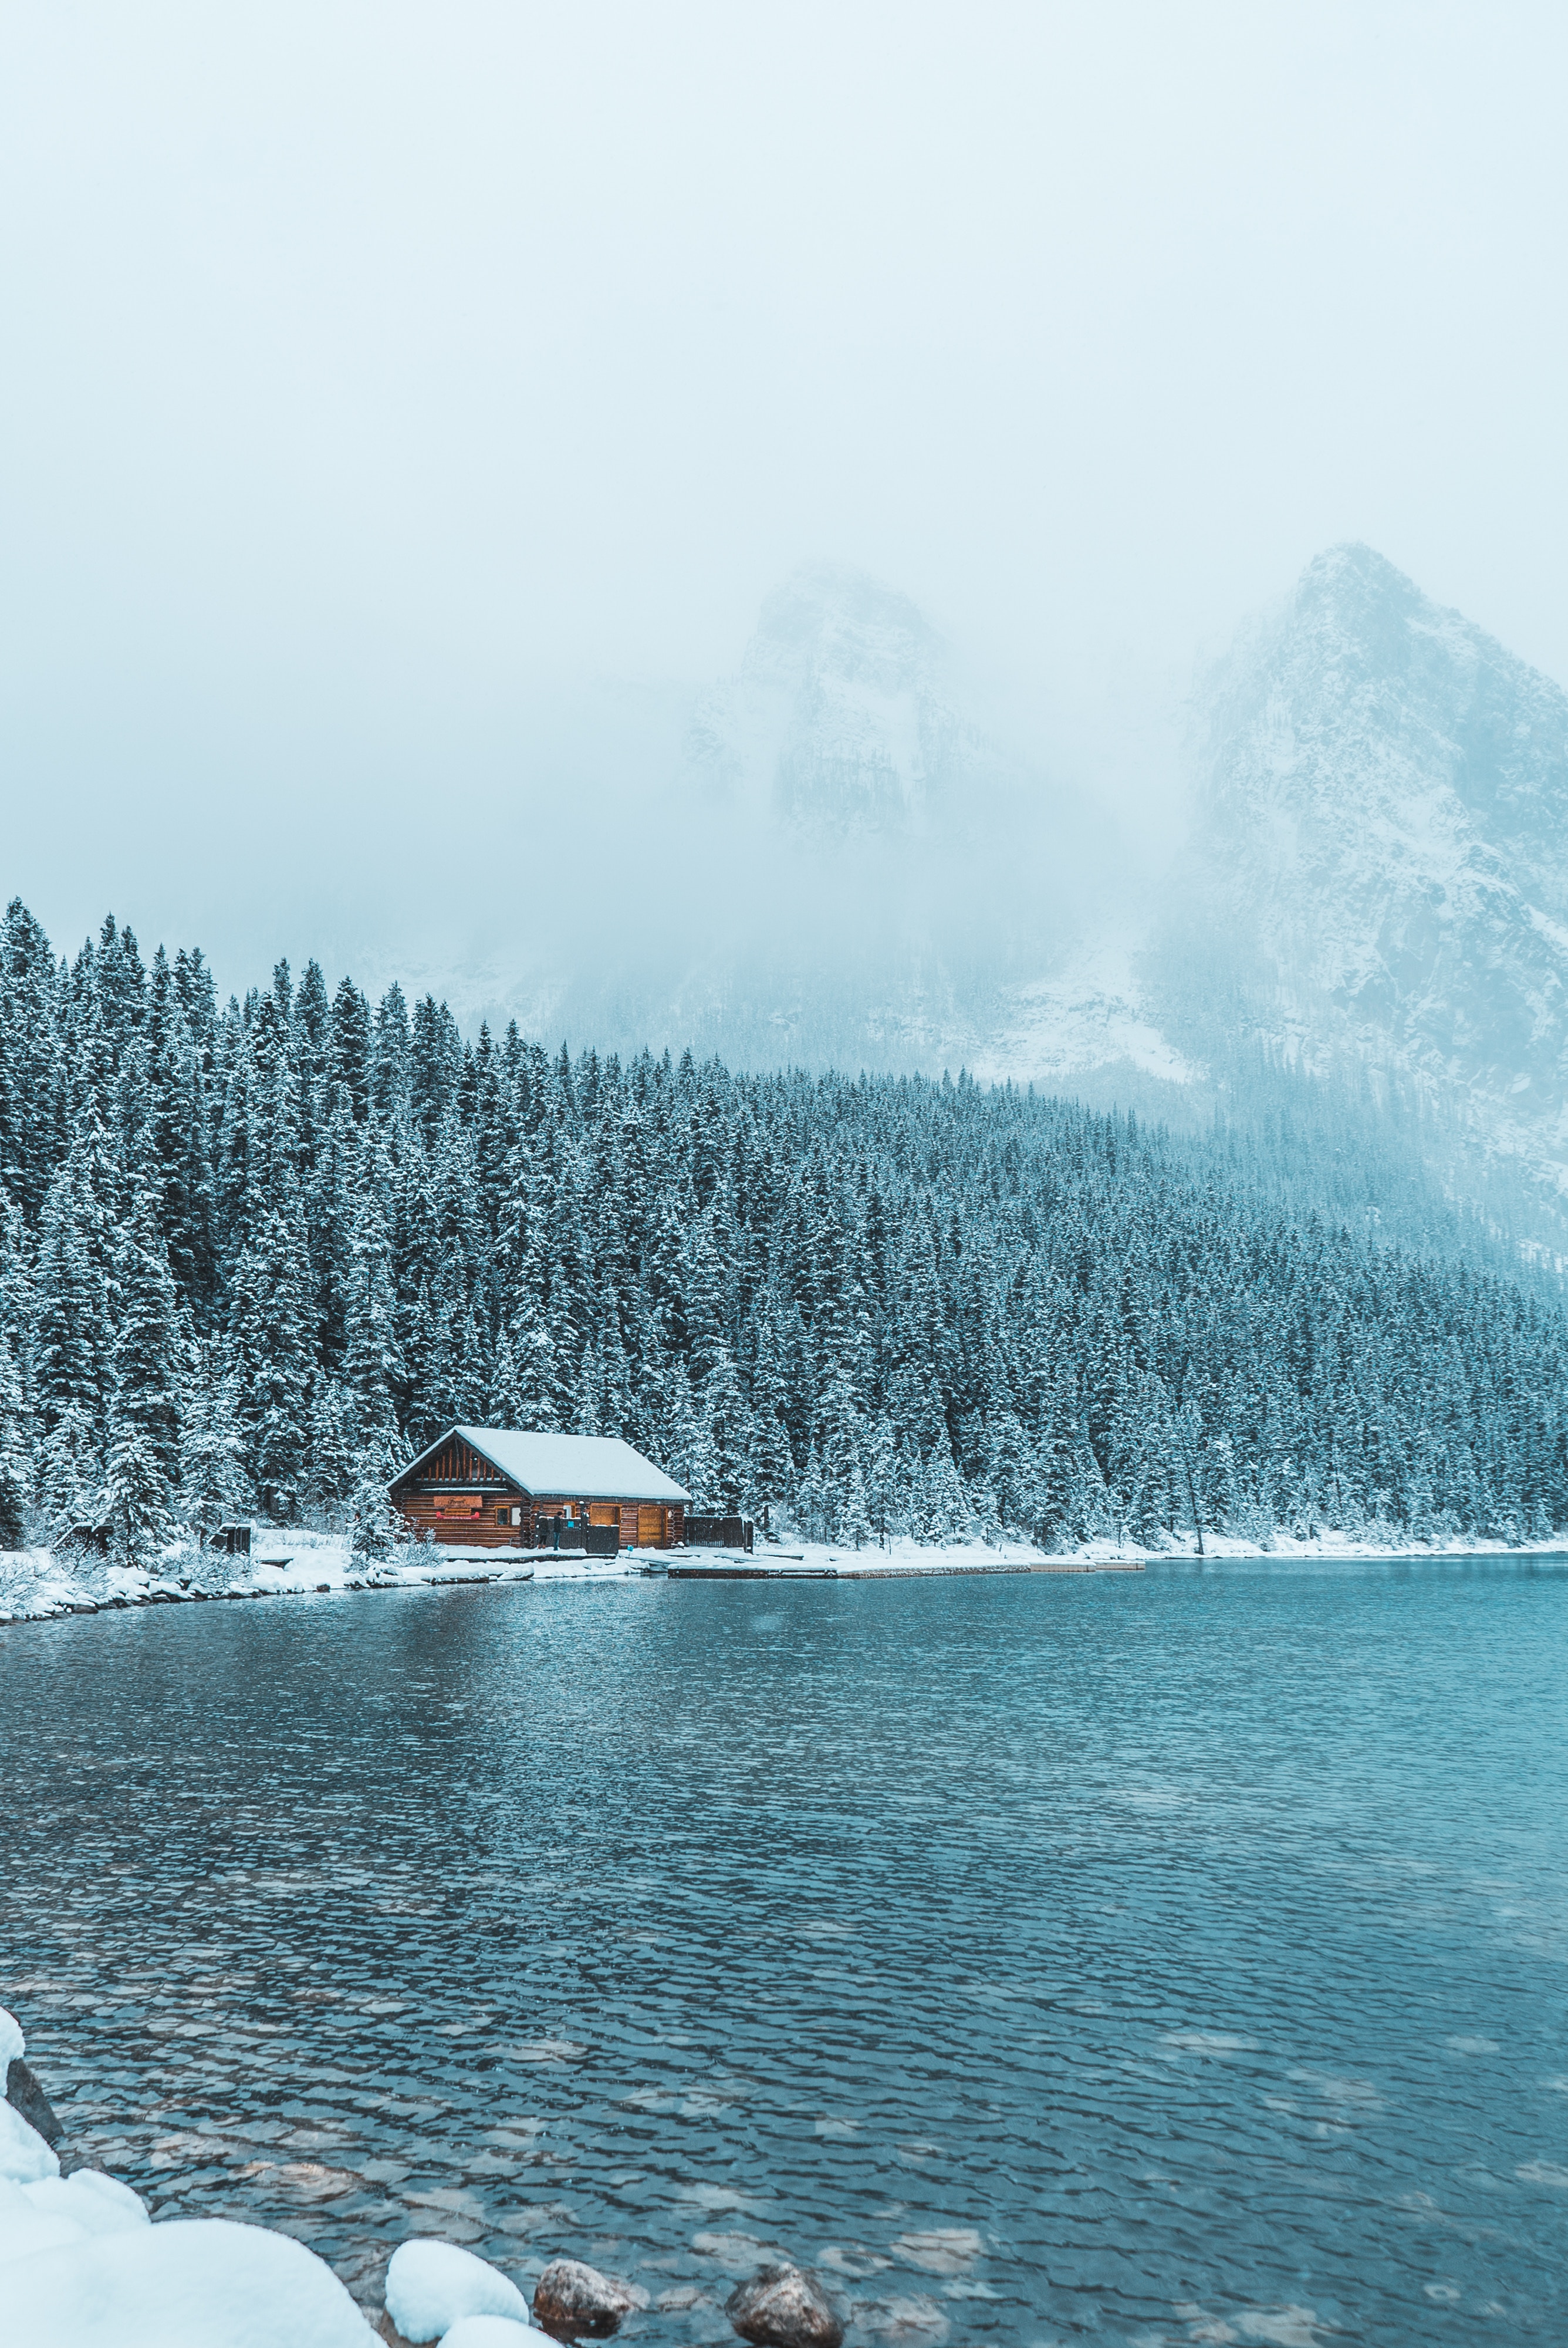 155348 descargar imagen invierno, naturaleza, montañas, lago, casa: fondos de pantalla y protectores de pantalla gratis